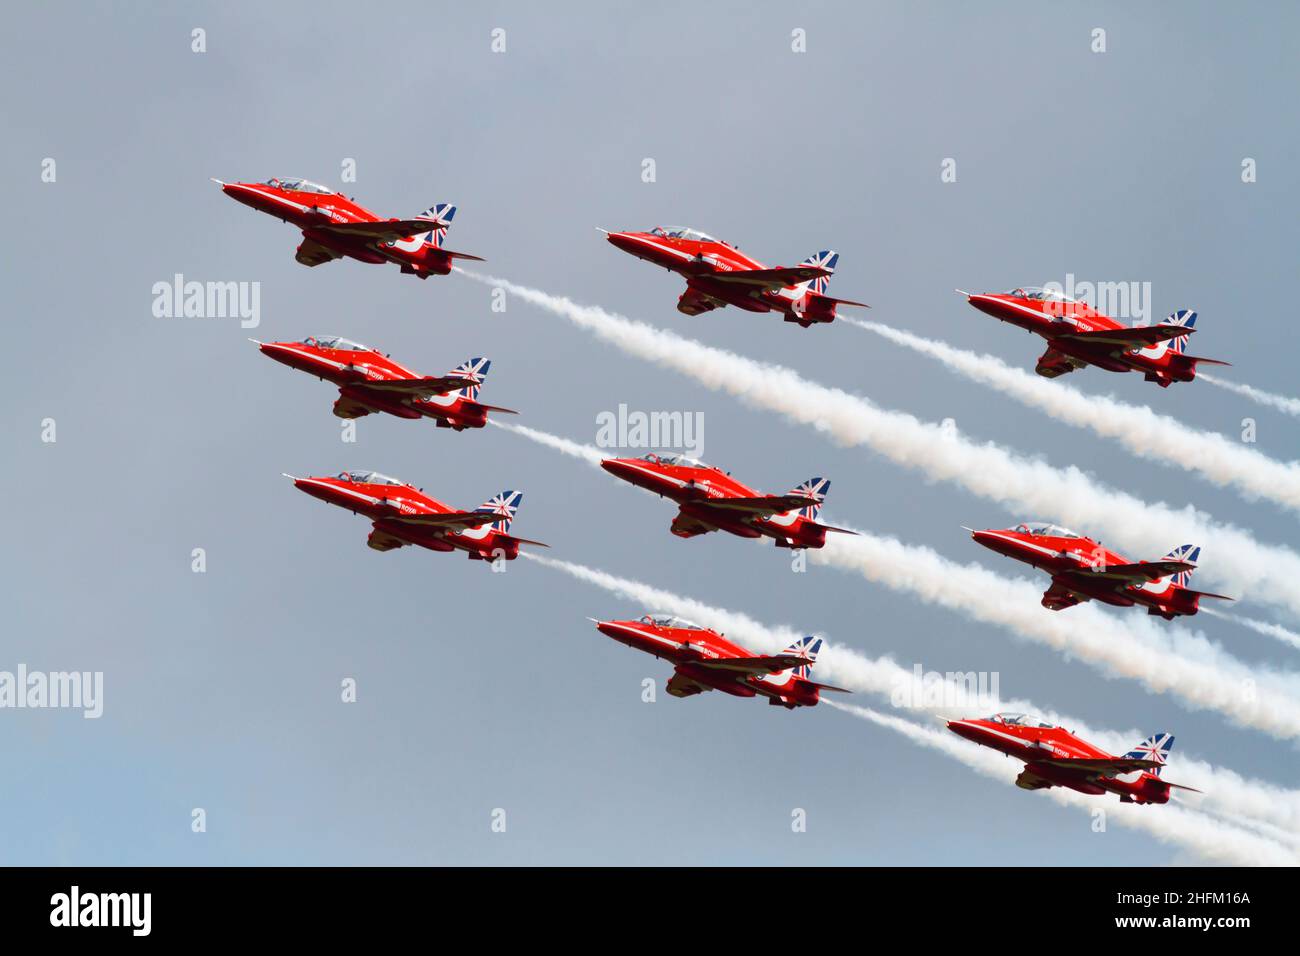 Diamond Nine Formation, BAE Hawk T1a velivolo della Royal Air Force Aerobatic Display team, The Red Arrows, con le 50th Anniversity coda marcature. Foto Stock